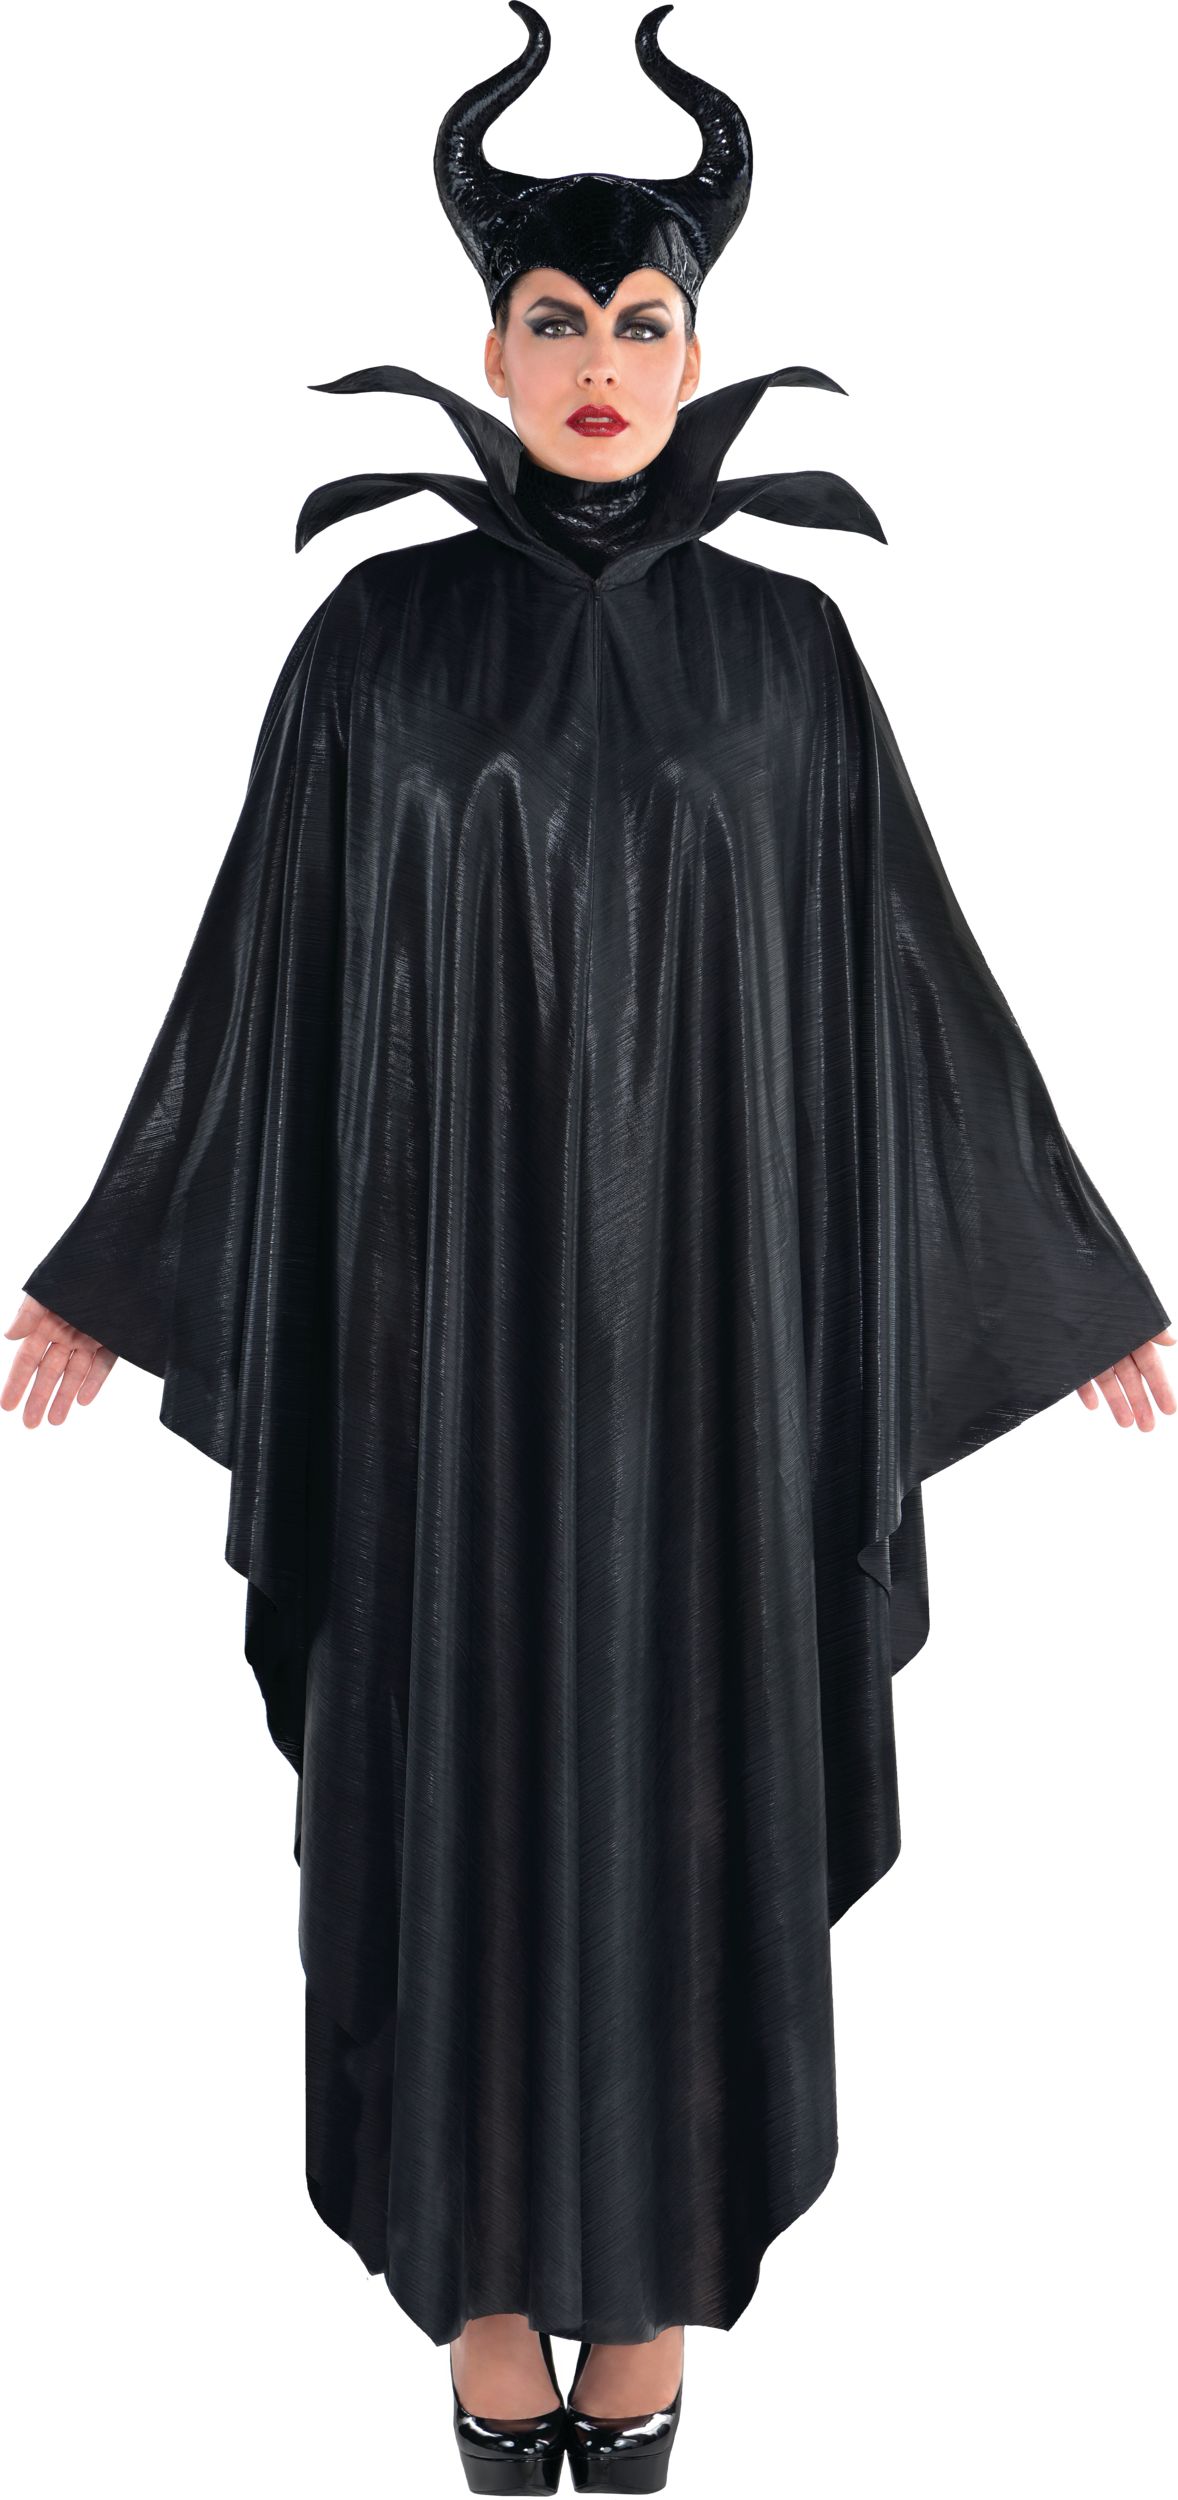 Women's Disney Sleeping Beauty Maleficent Black Dress with Headband Halloween Costume, Assorted Sizes